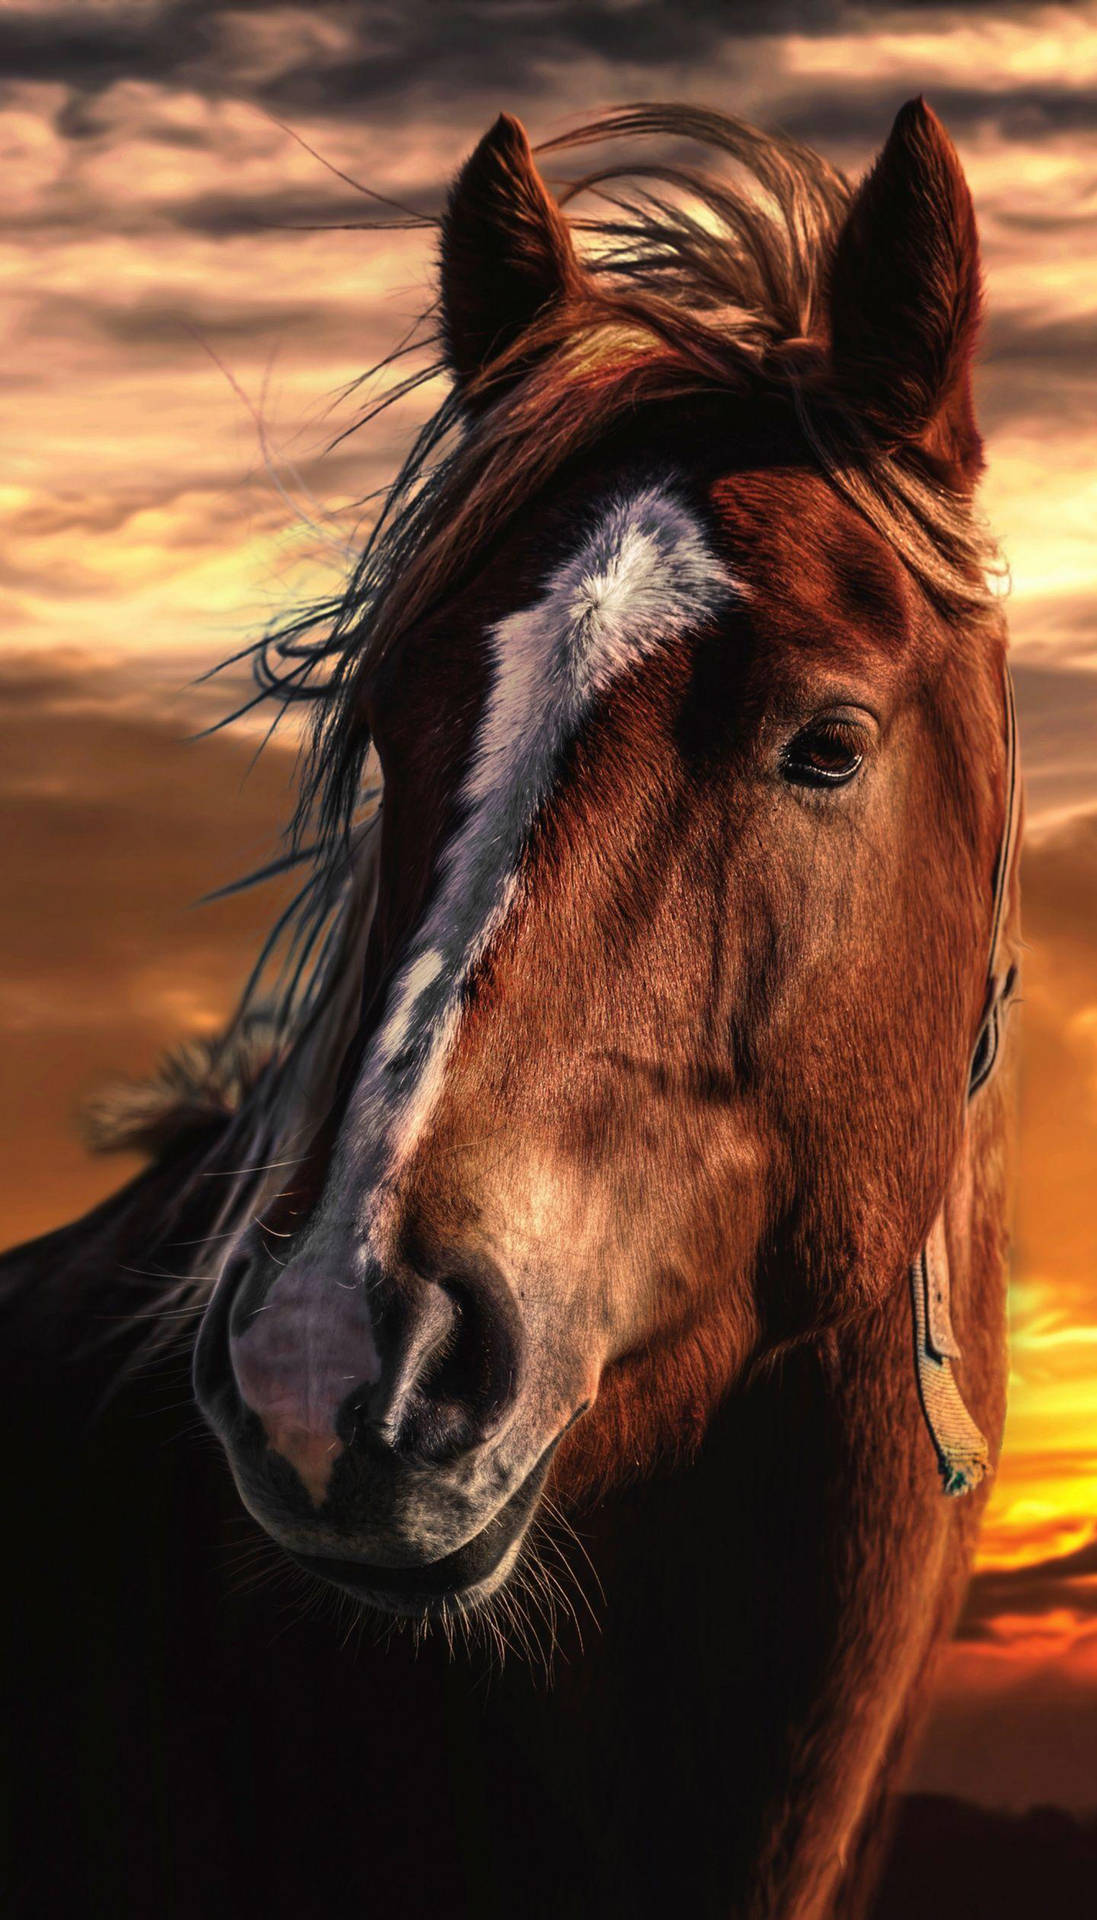 Horse Face On Sunset Background